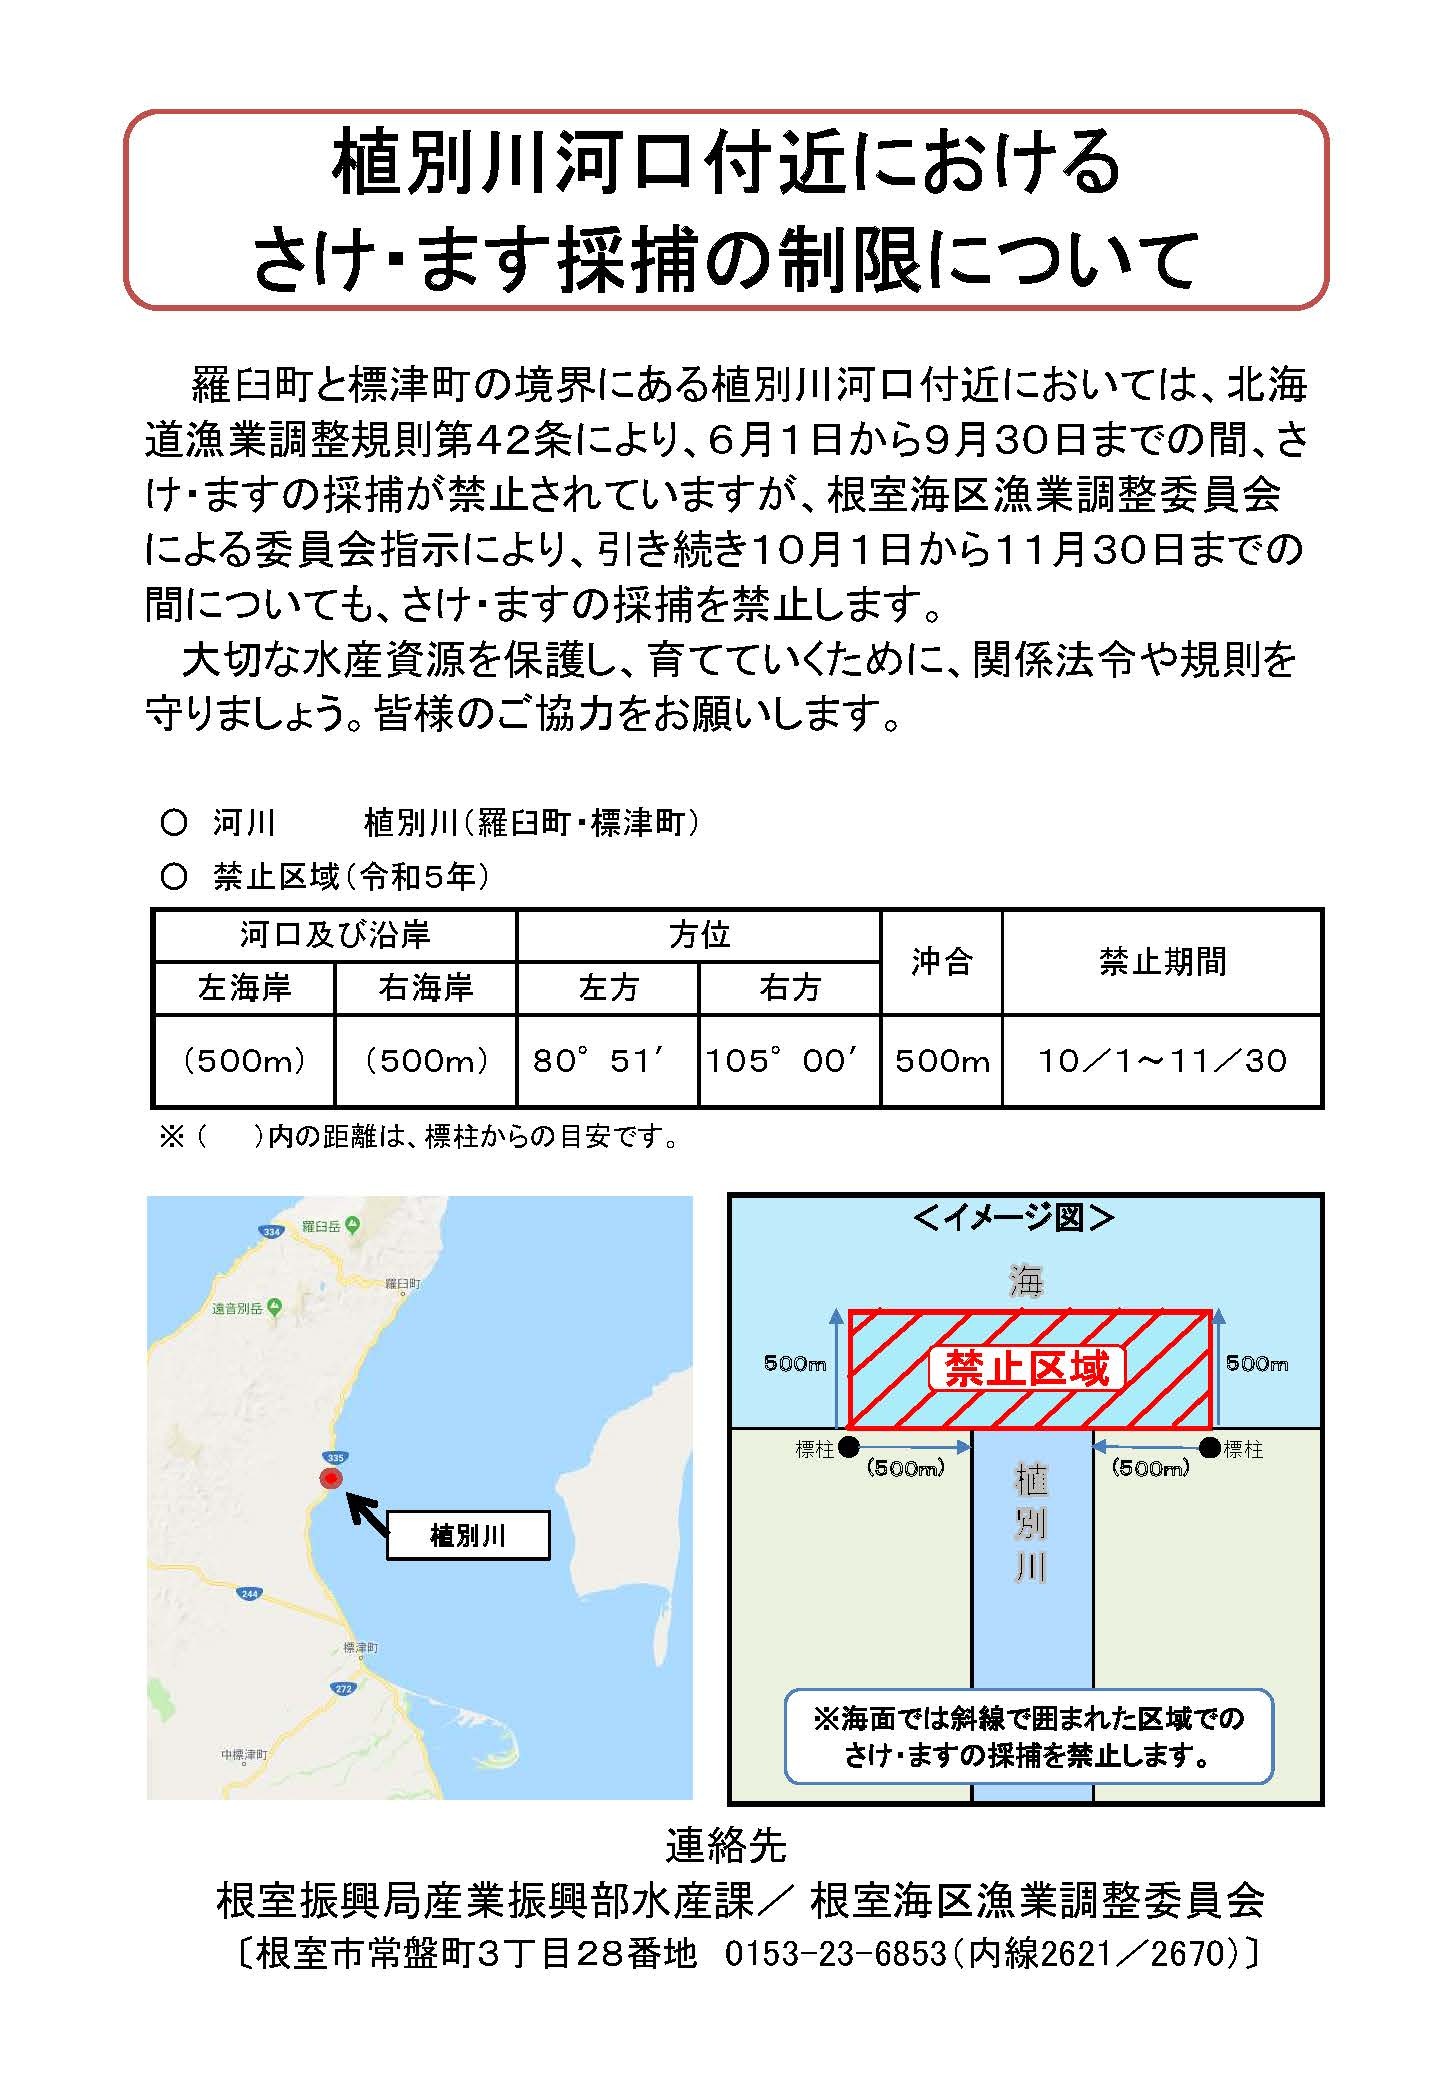 R5チラシ_植別川河口付近におけるさけ・ます採捕の制限について (JPG 430KB)